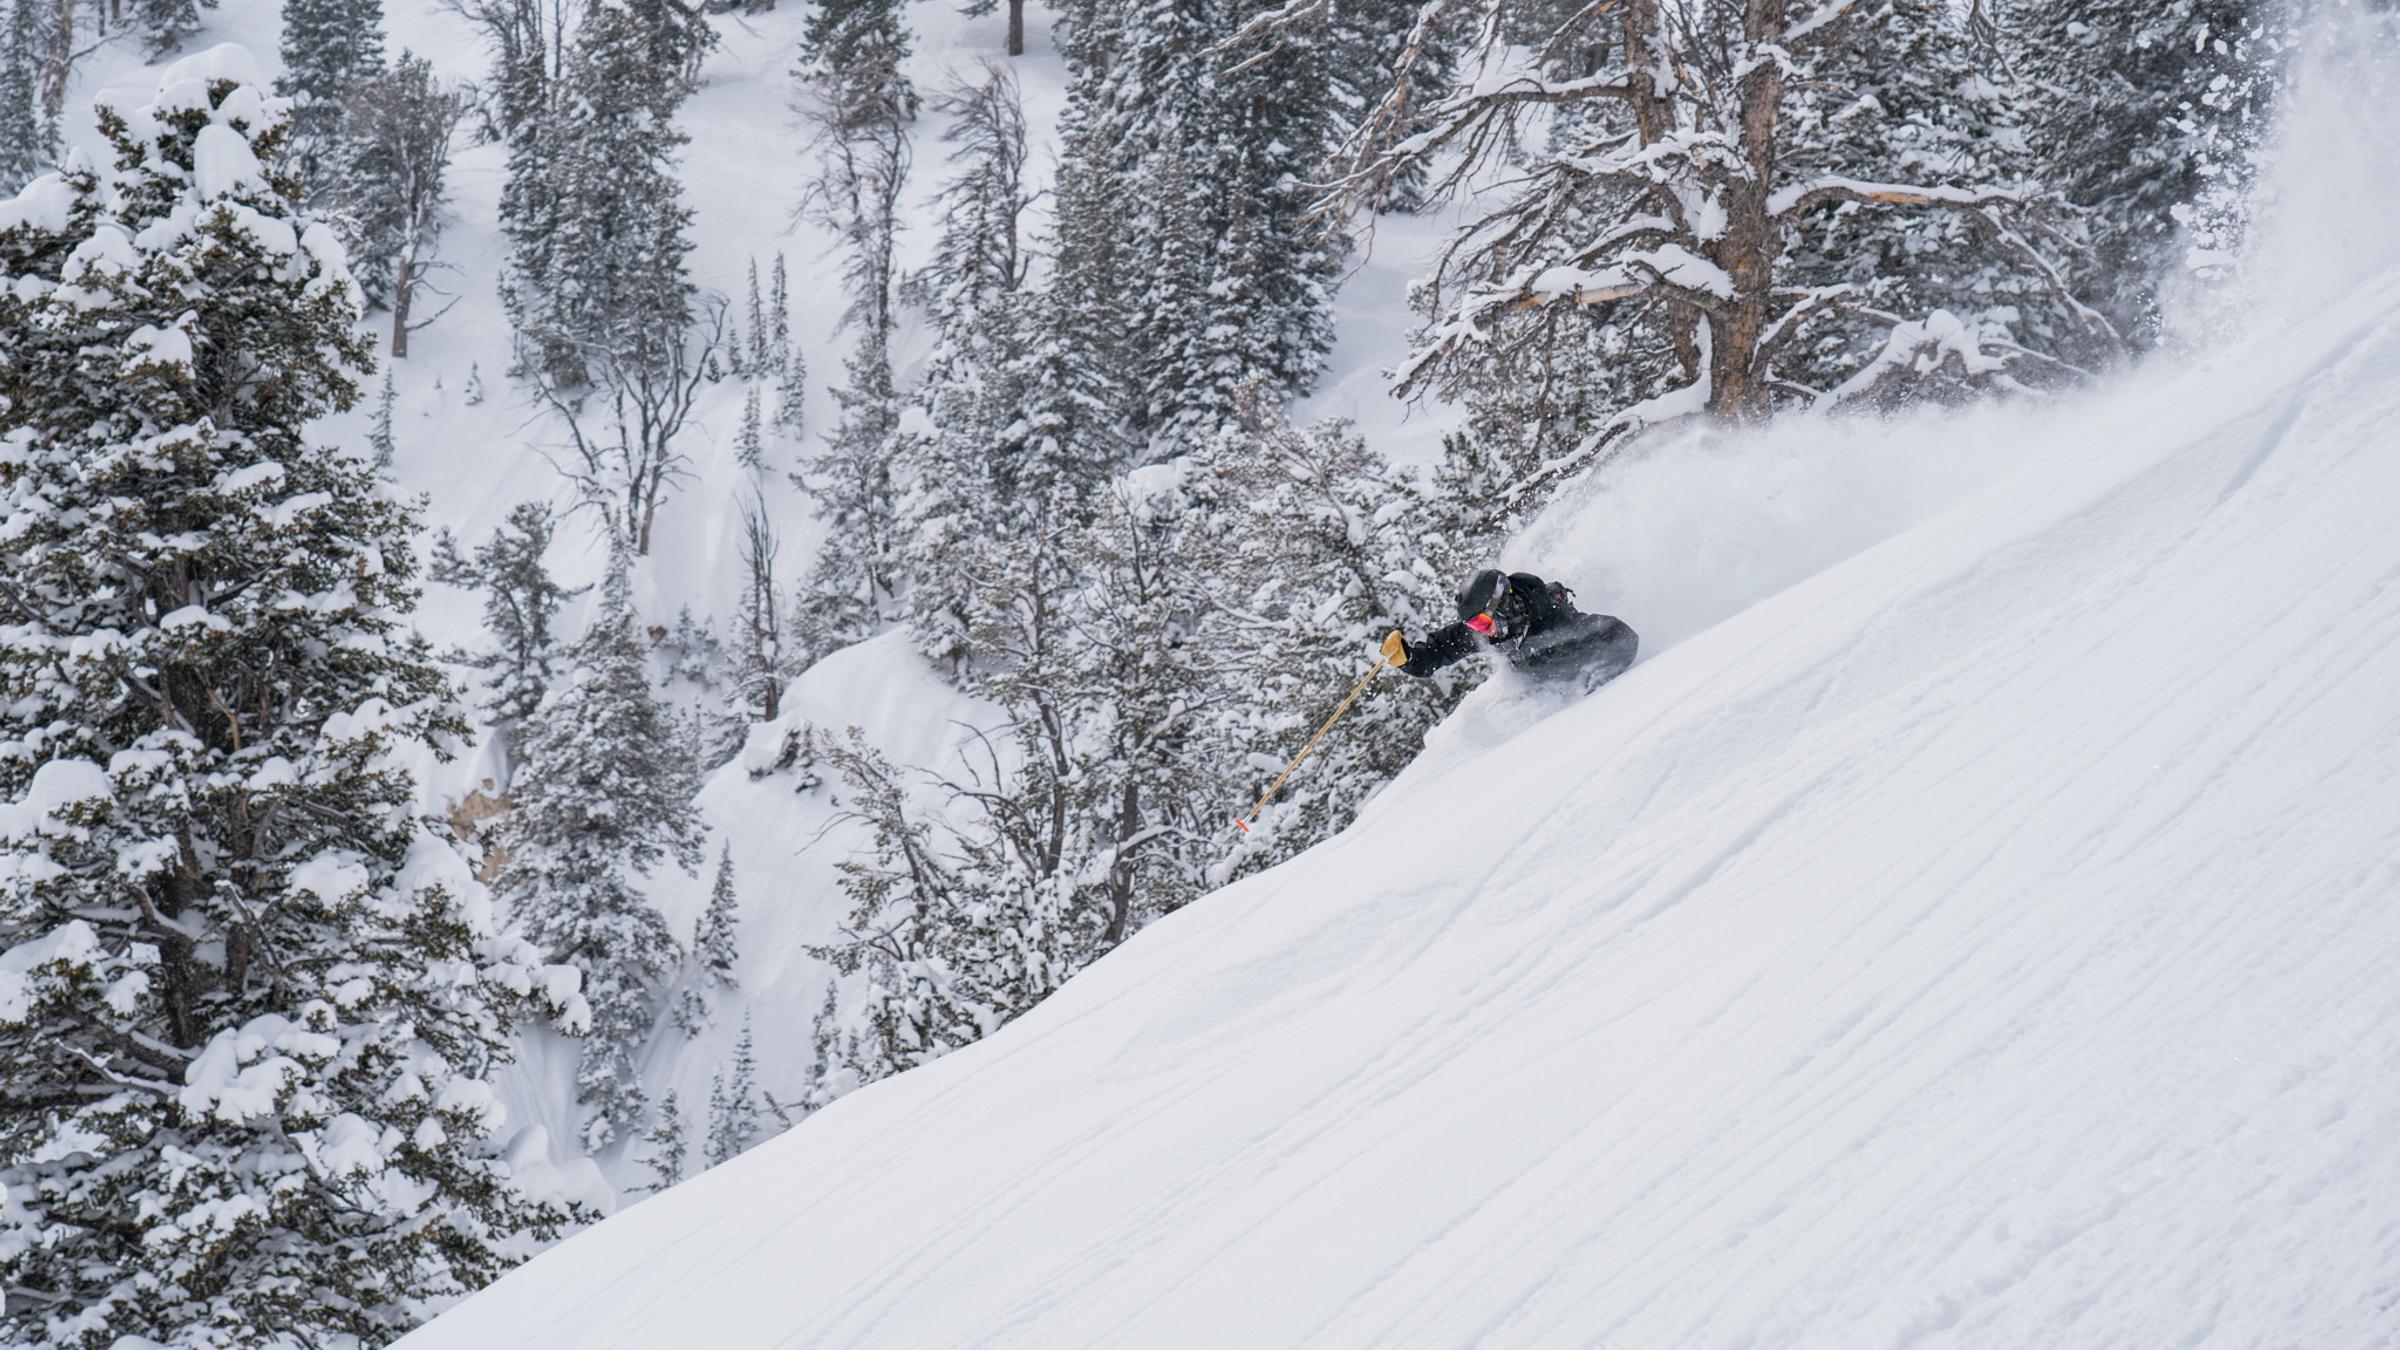 Solitude skier enjoys powder off of Summit chair